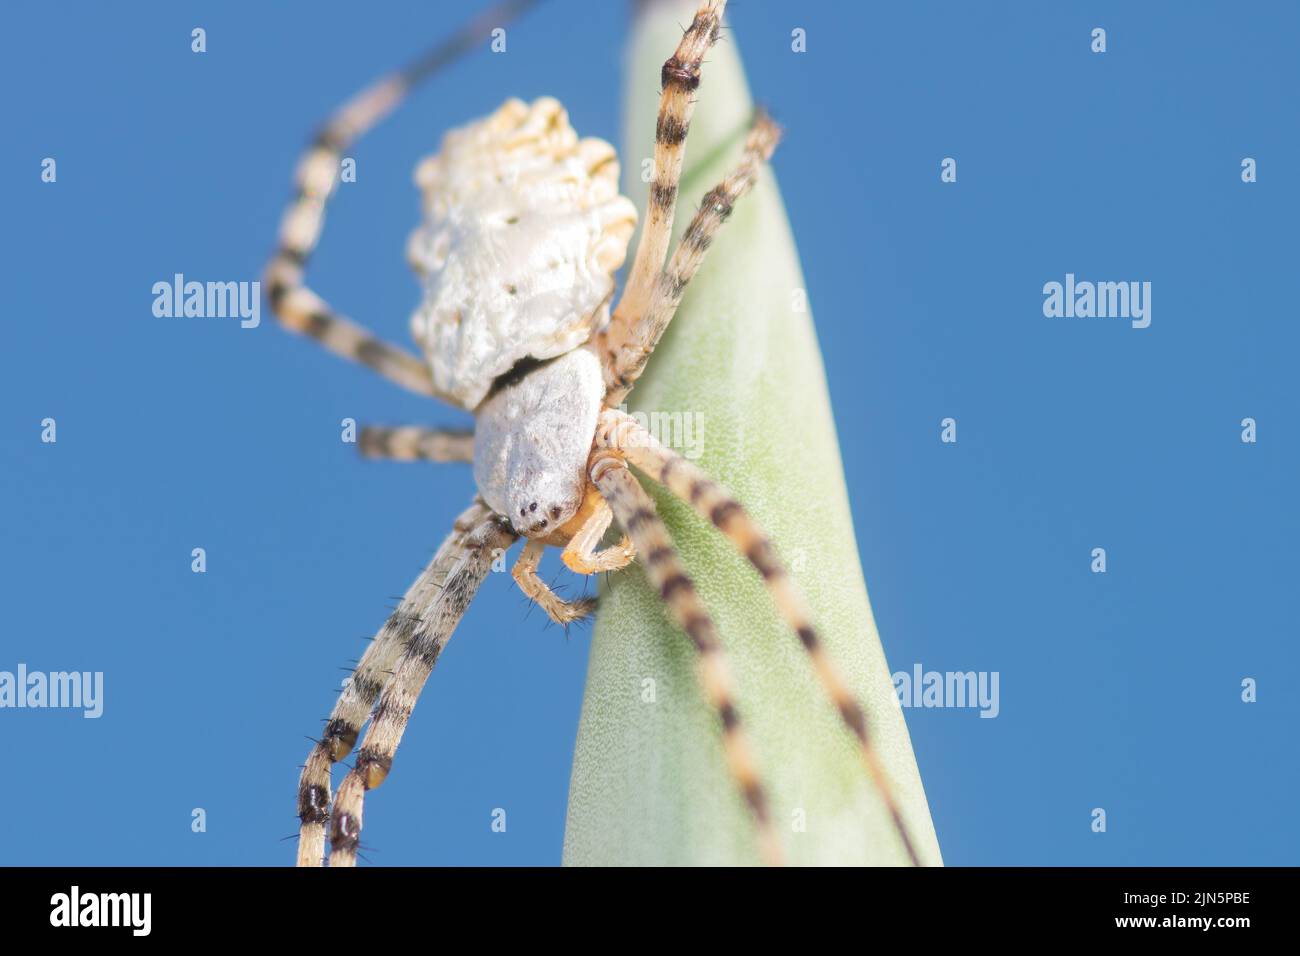 Argiope Lobada spider against the sky. Macro photo. Stock Photo